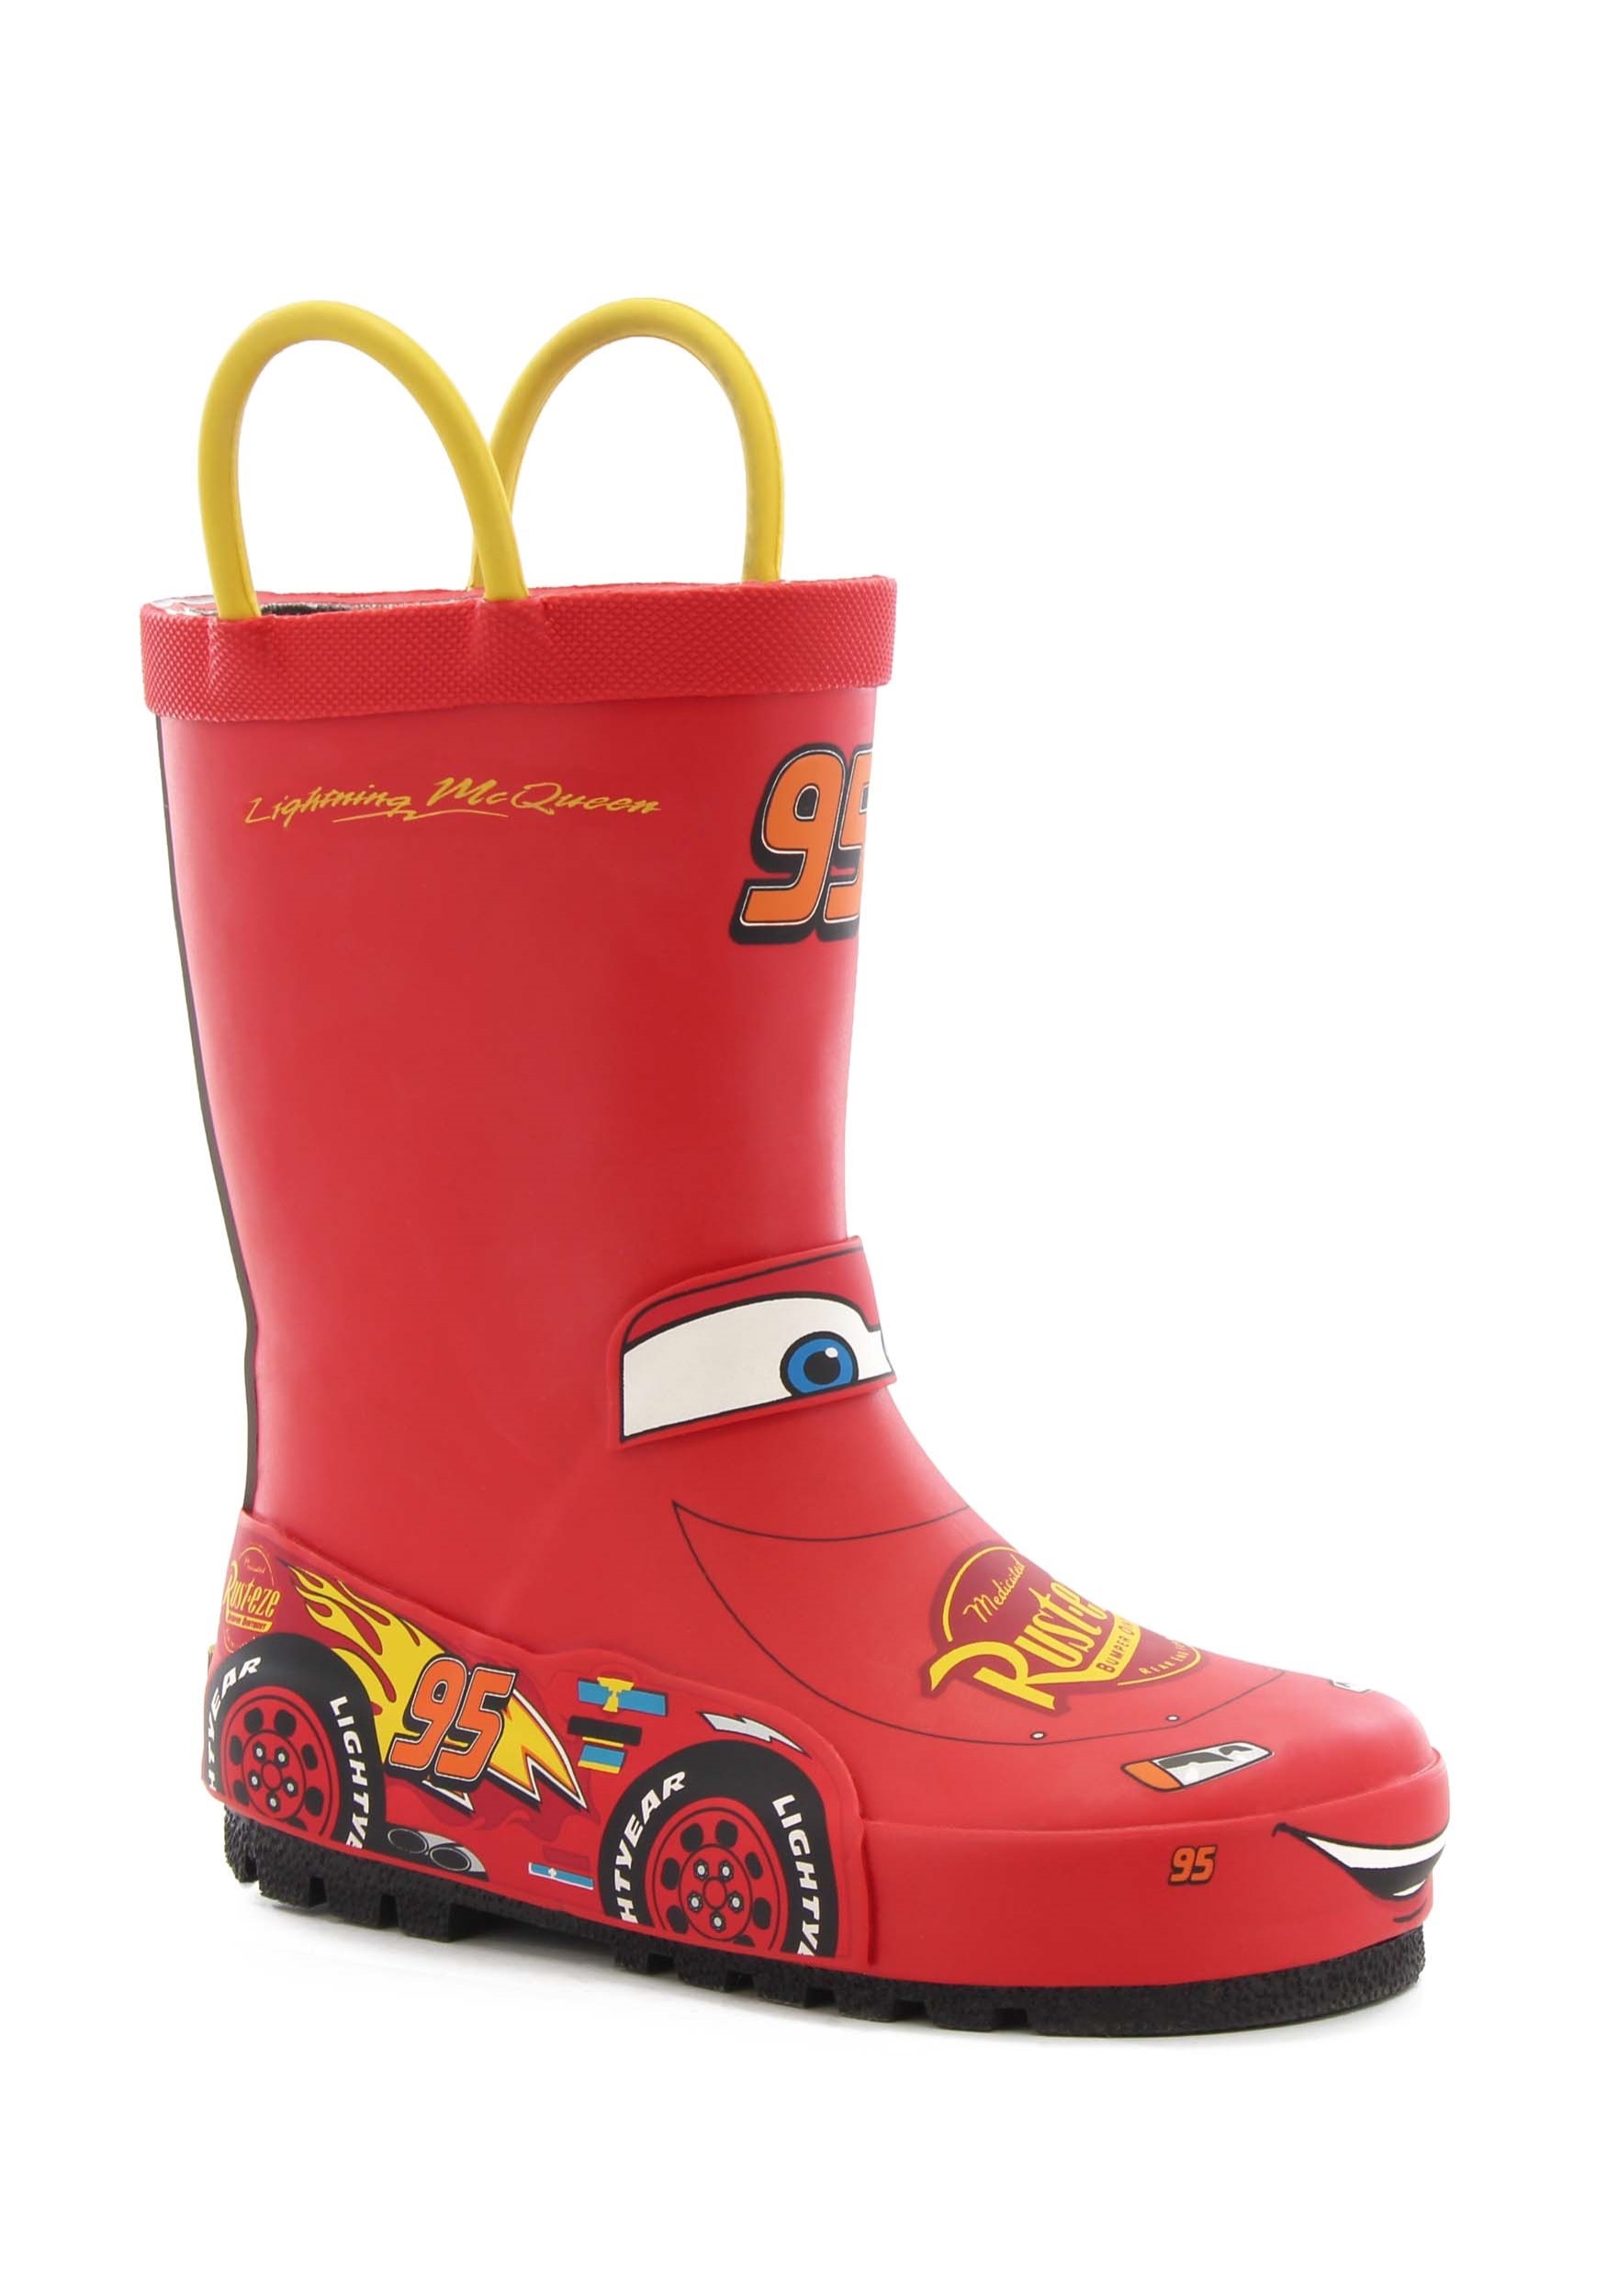 disney cars rain boots